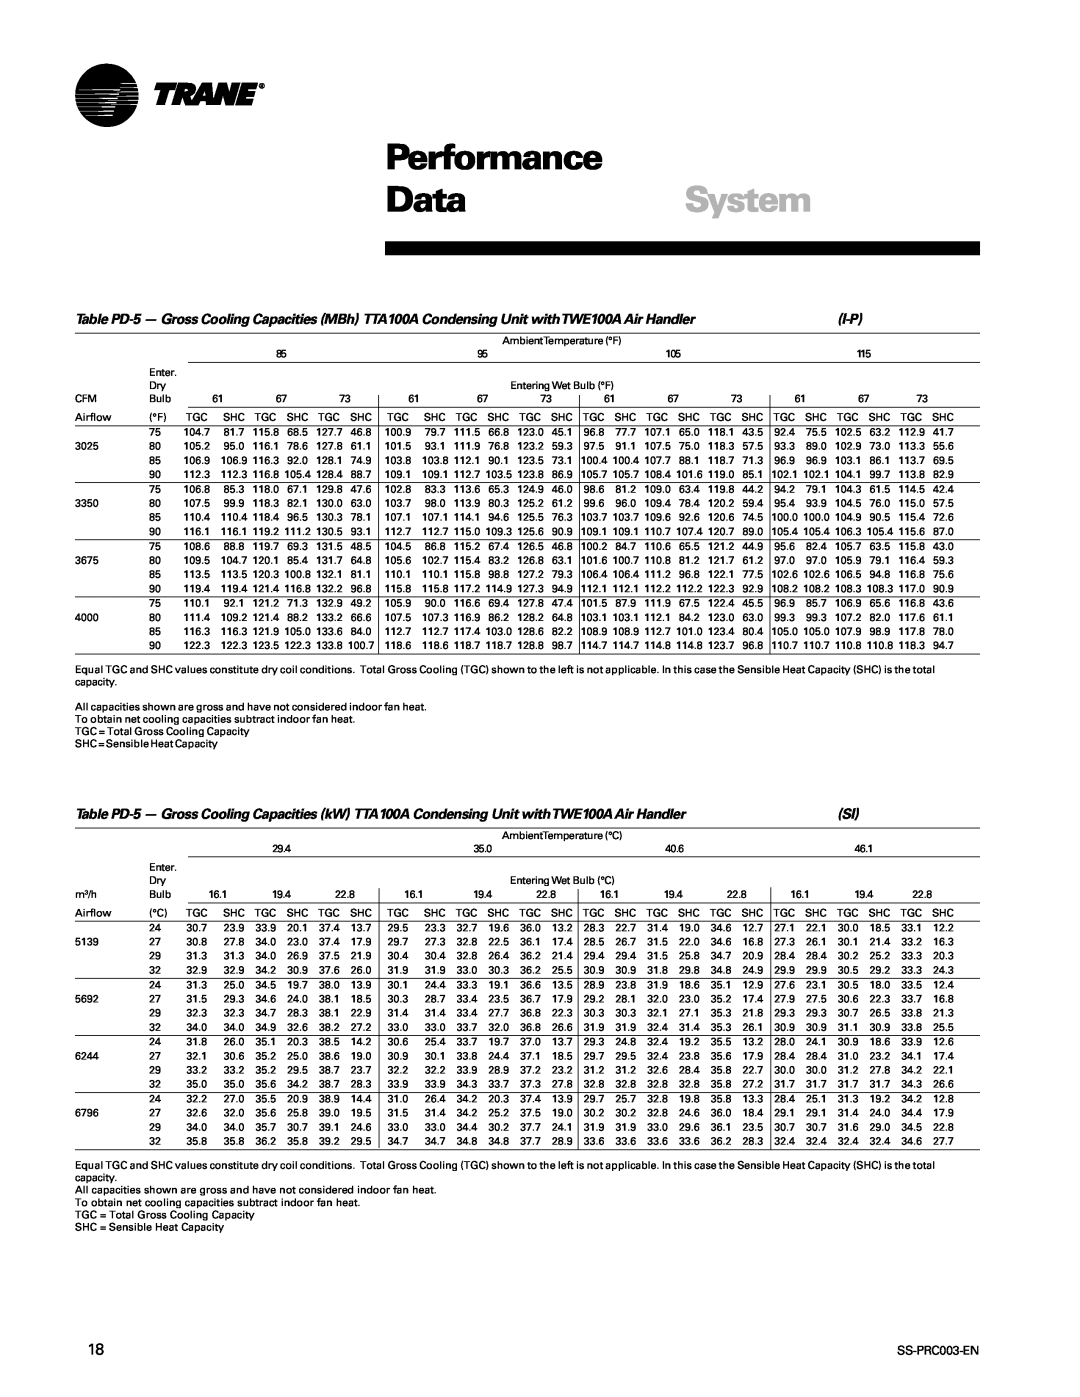 Trane SS-PRC003-EN manual Performance, DataSystem, AmbientTemperature F 